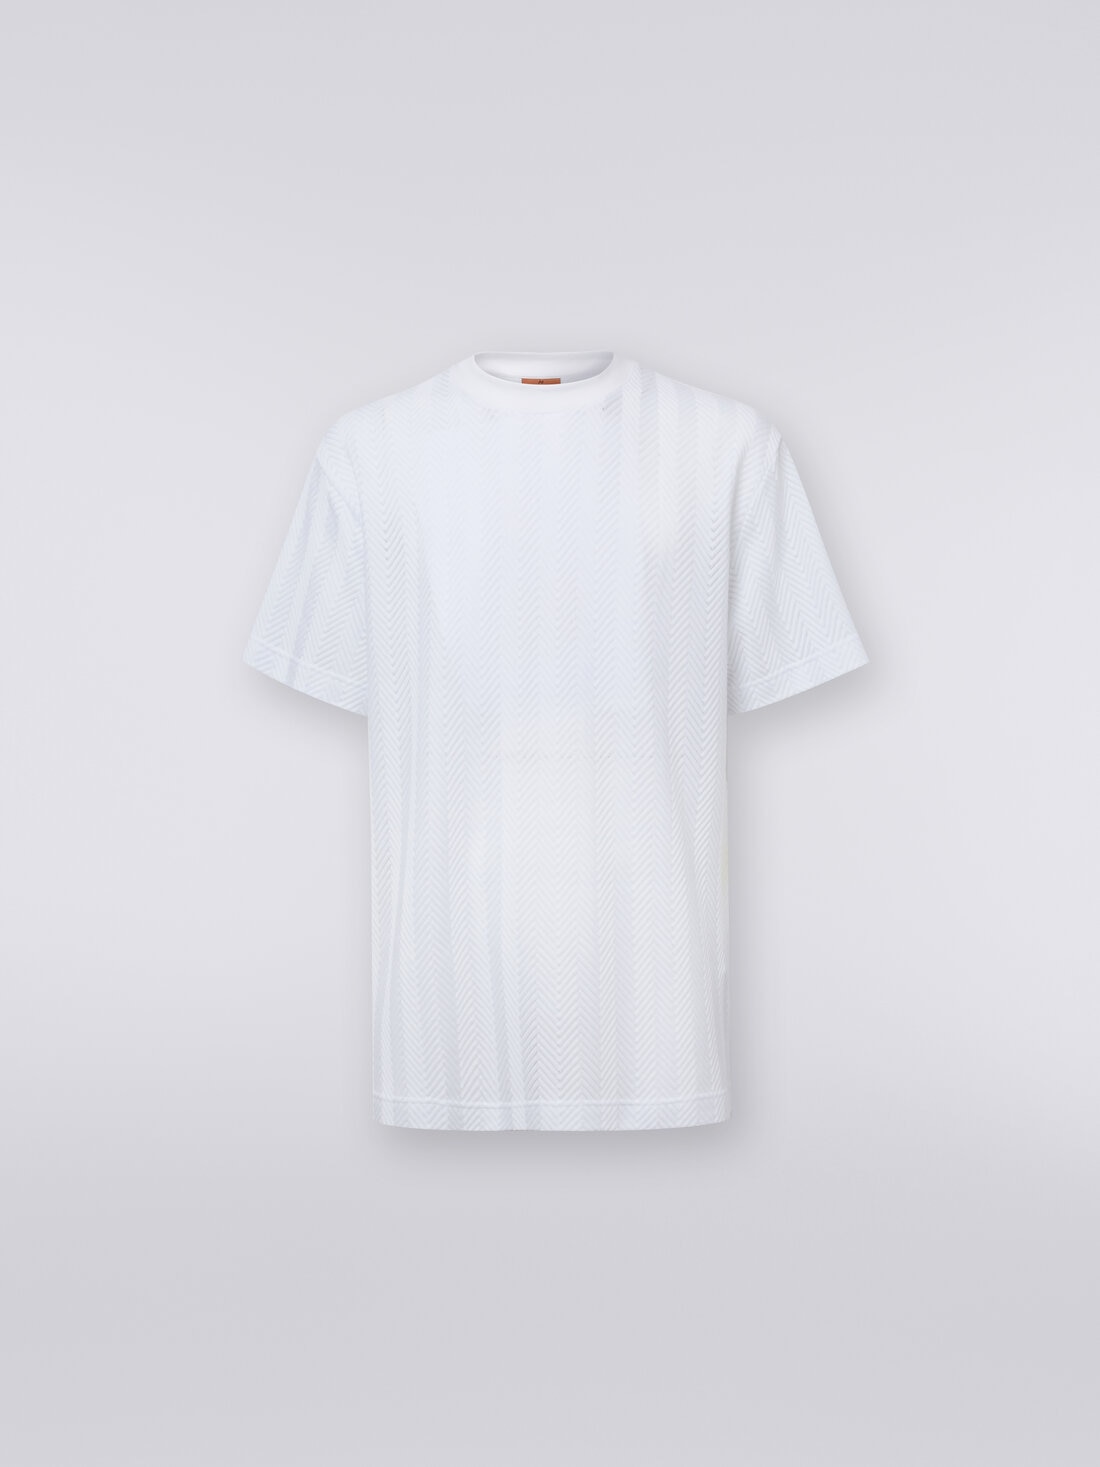 Crew-neck T-shirt in chevron viscose and cotton, White  - UC24SL00BR00JC10601 - 0